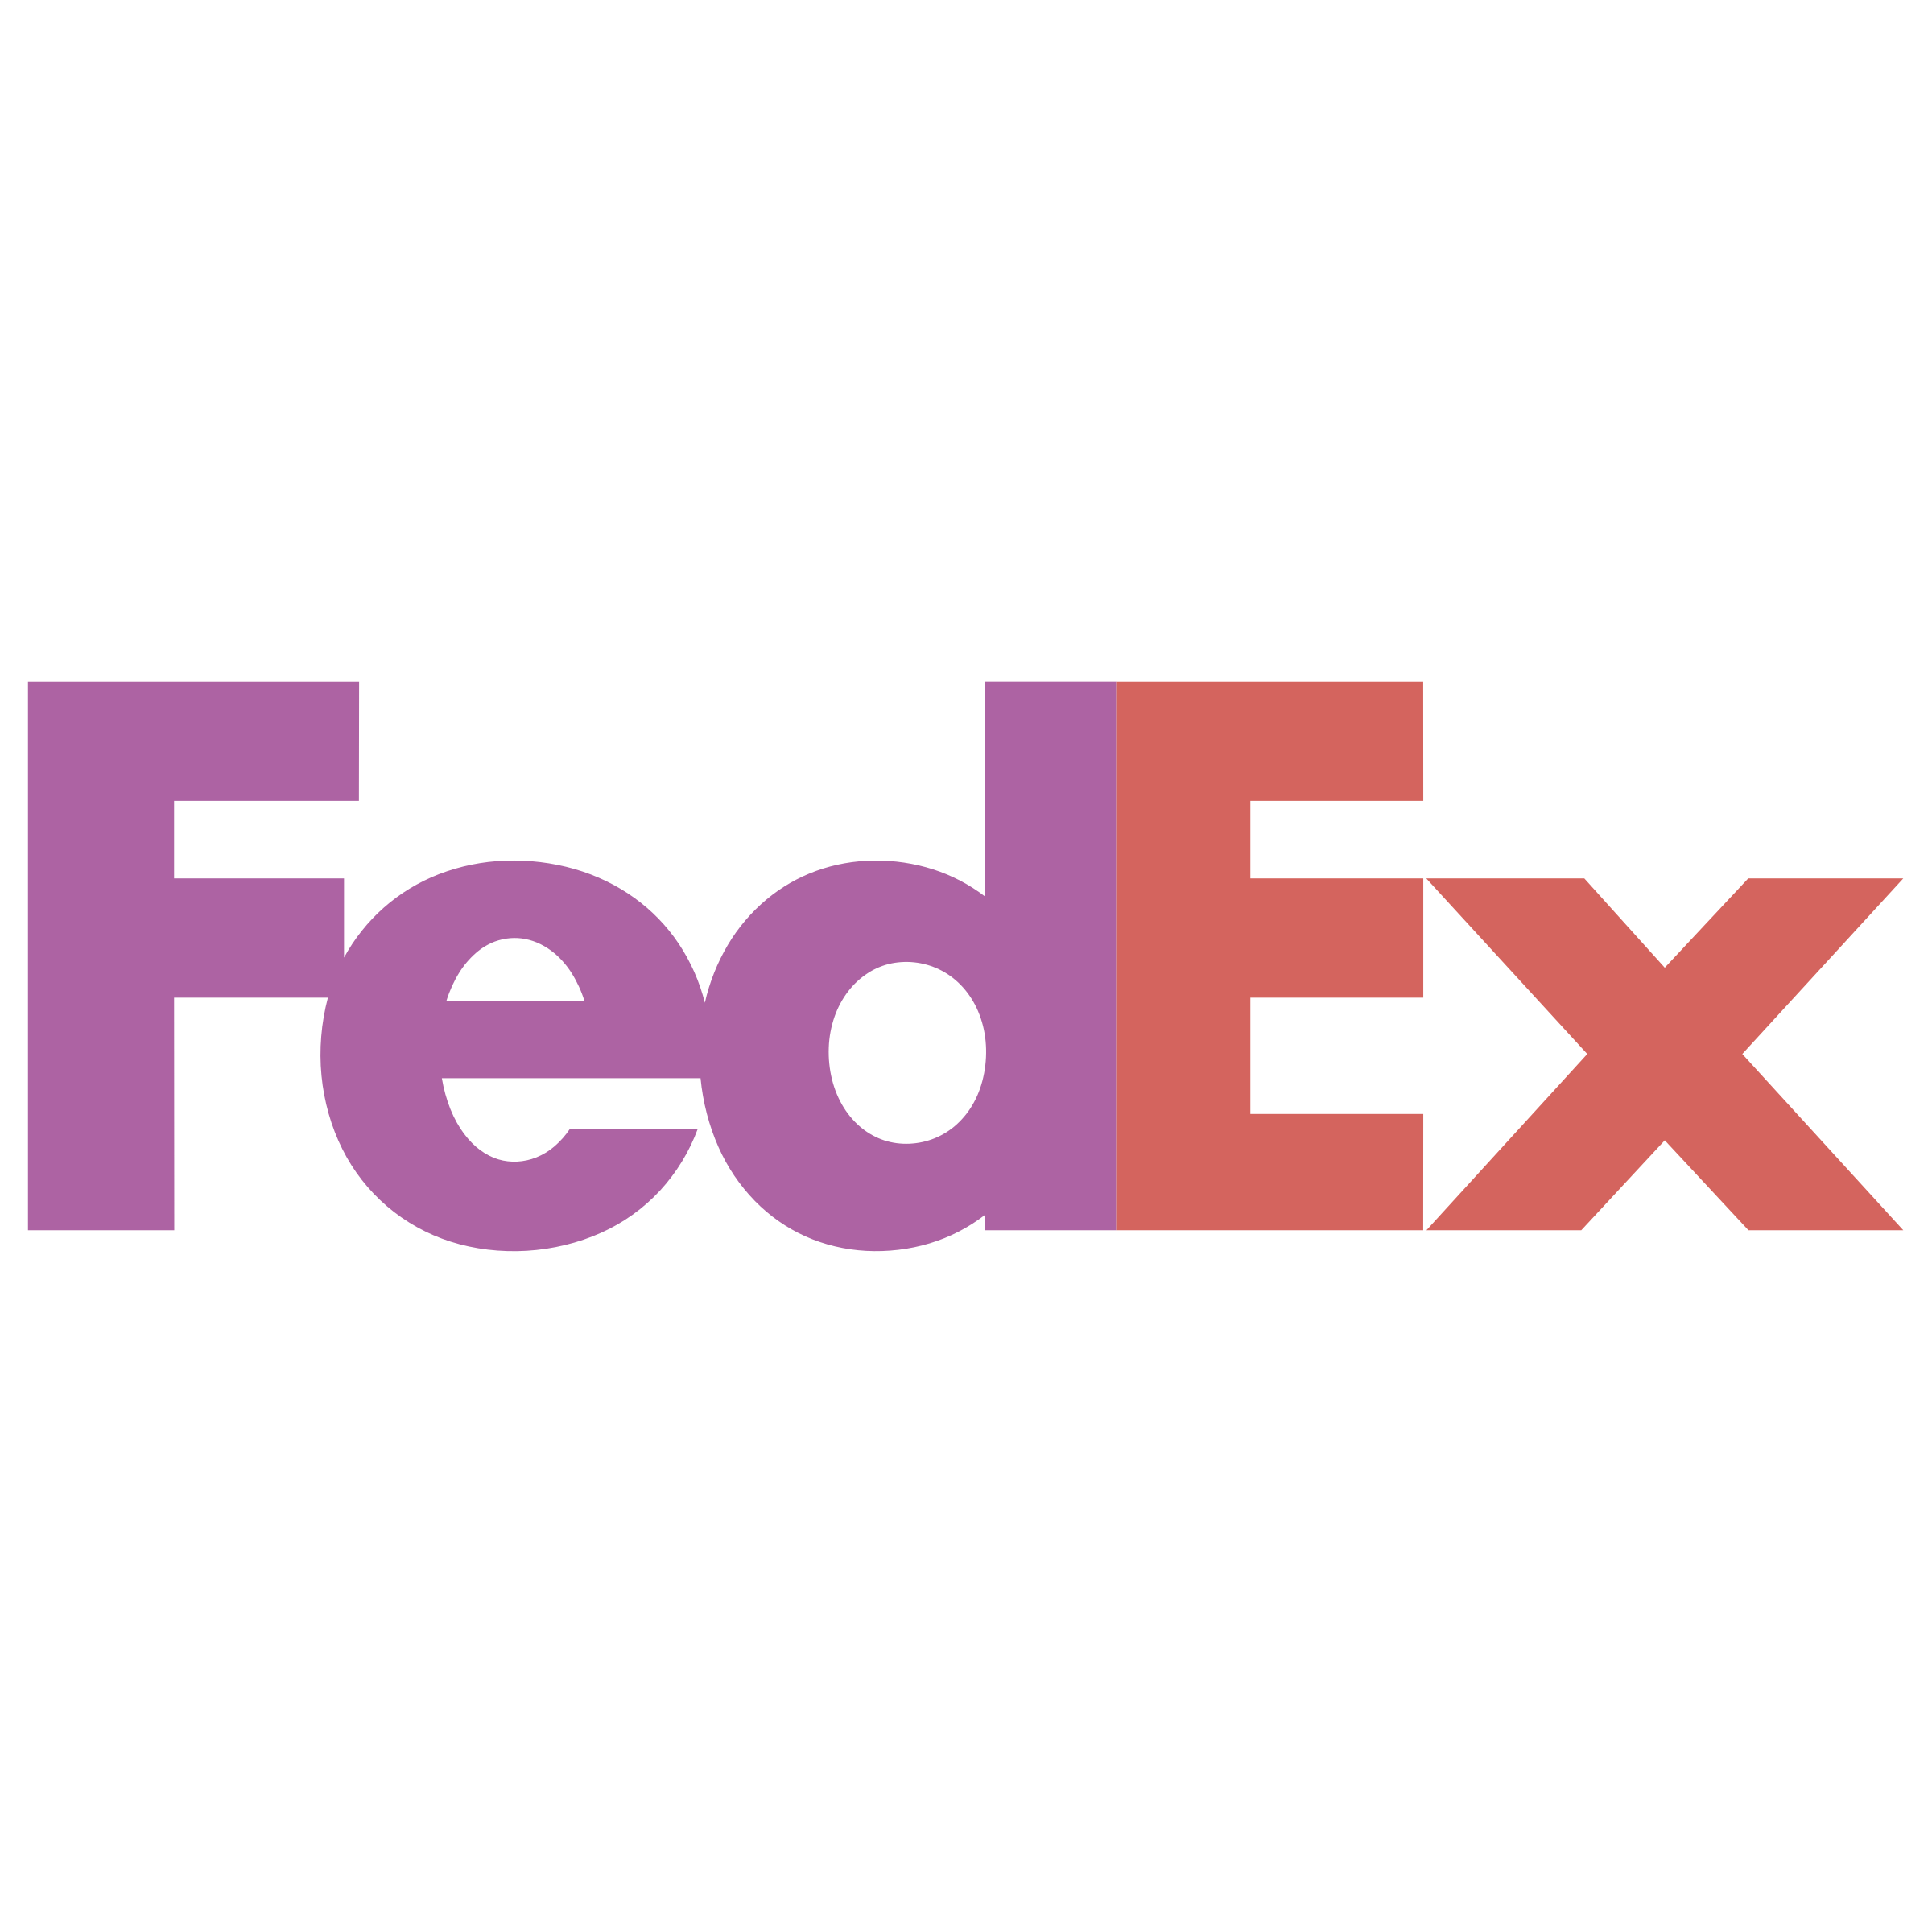 fedex hd text logo brand png #42680